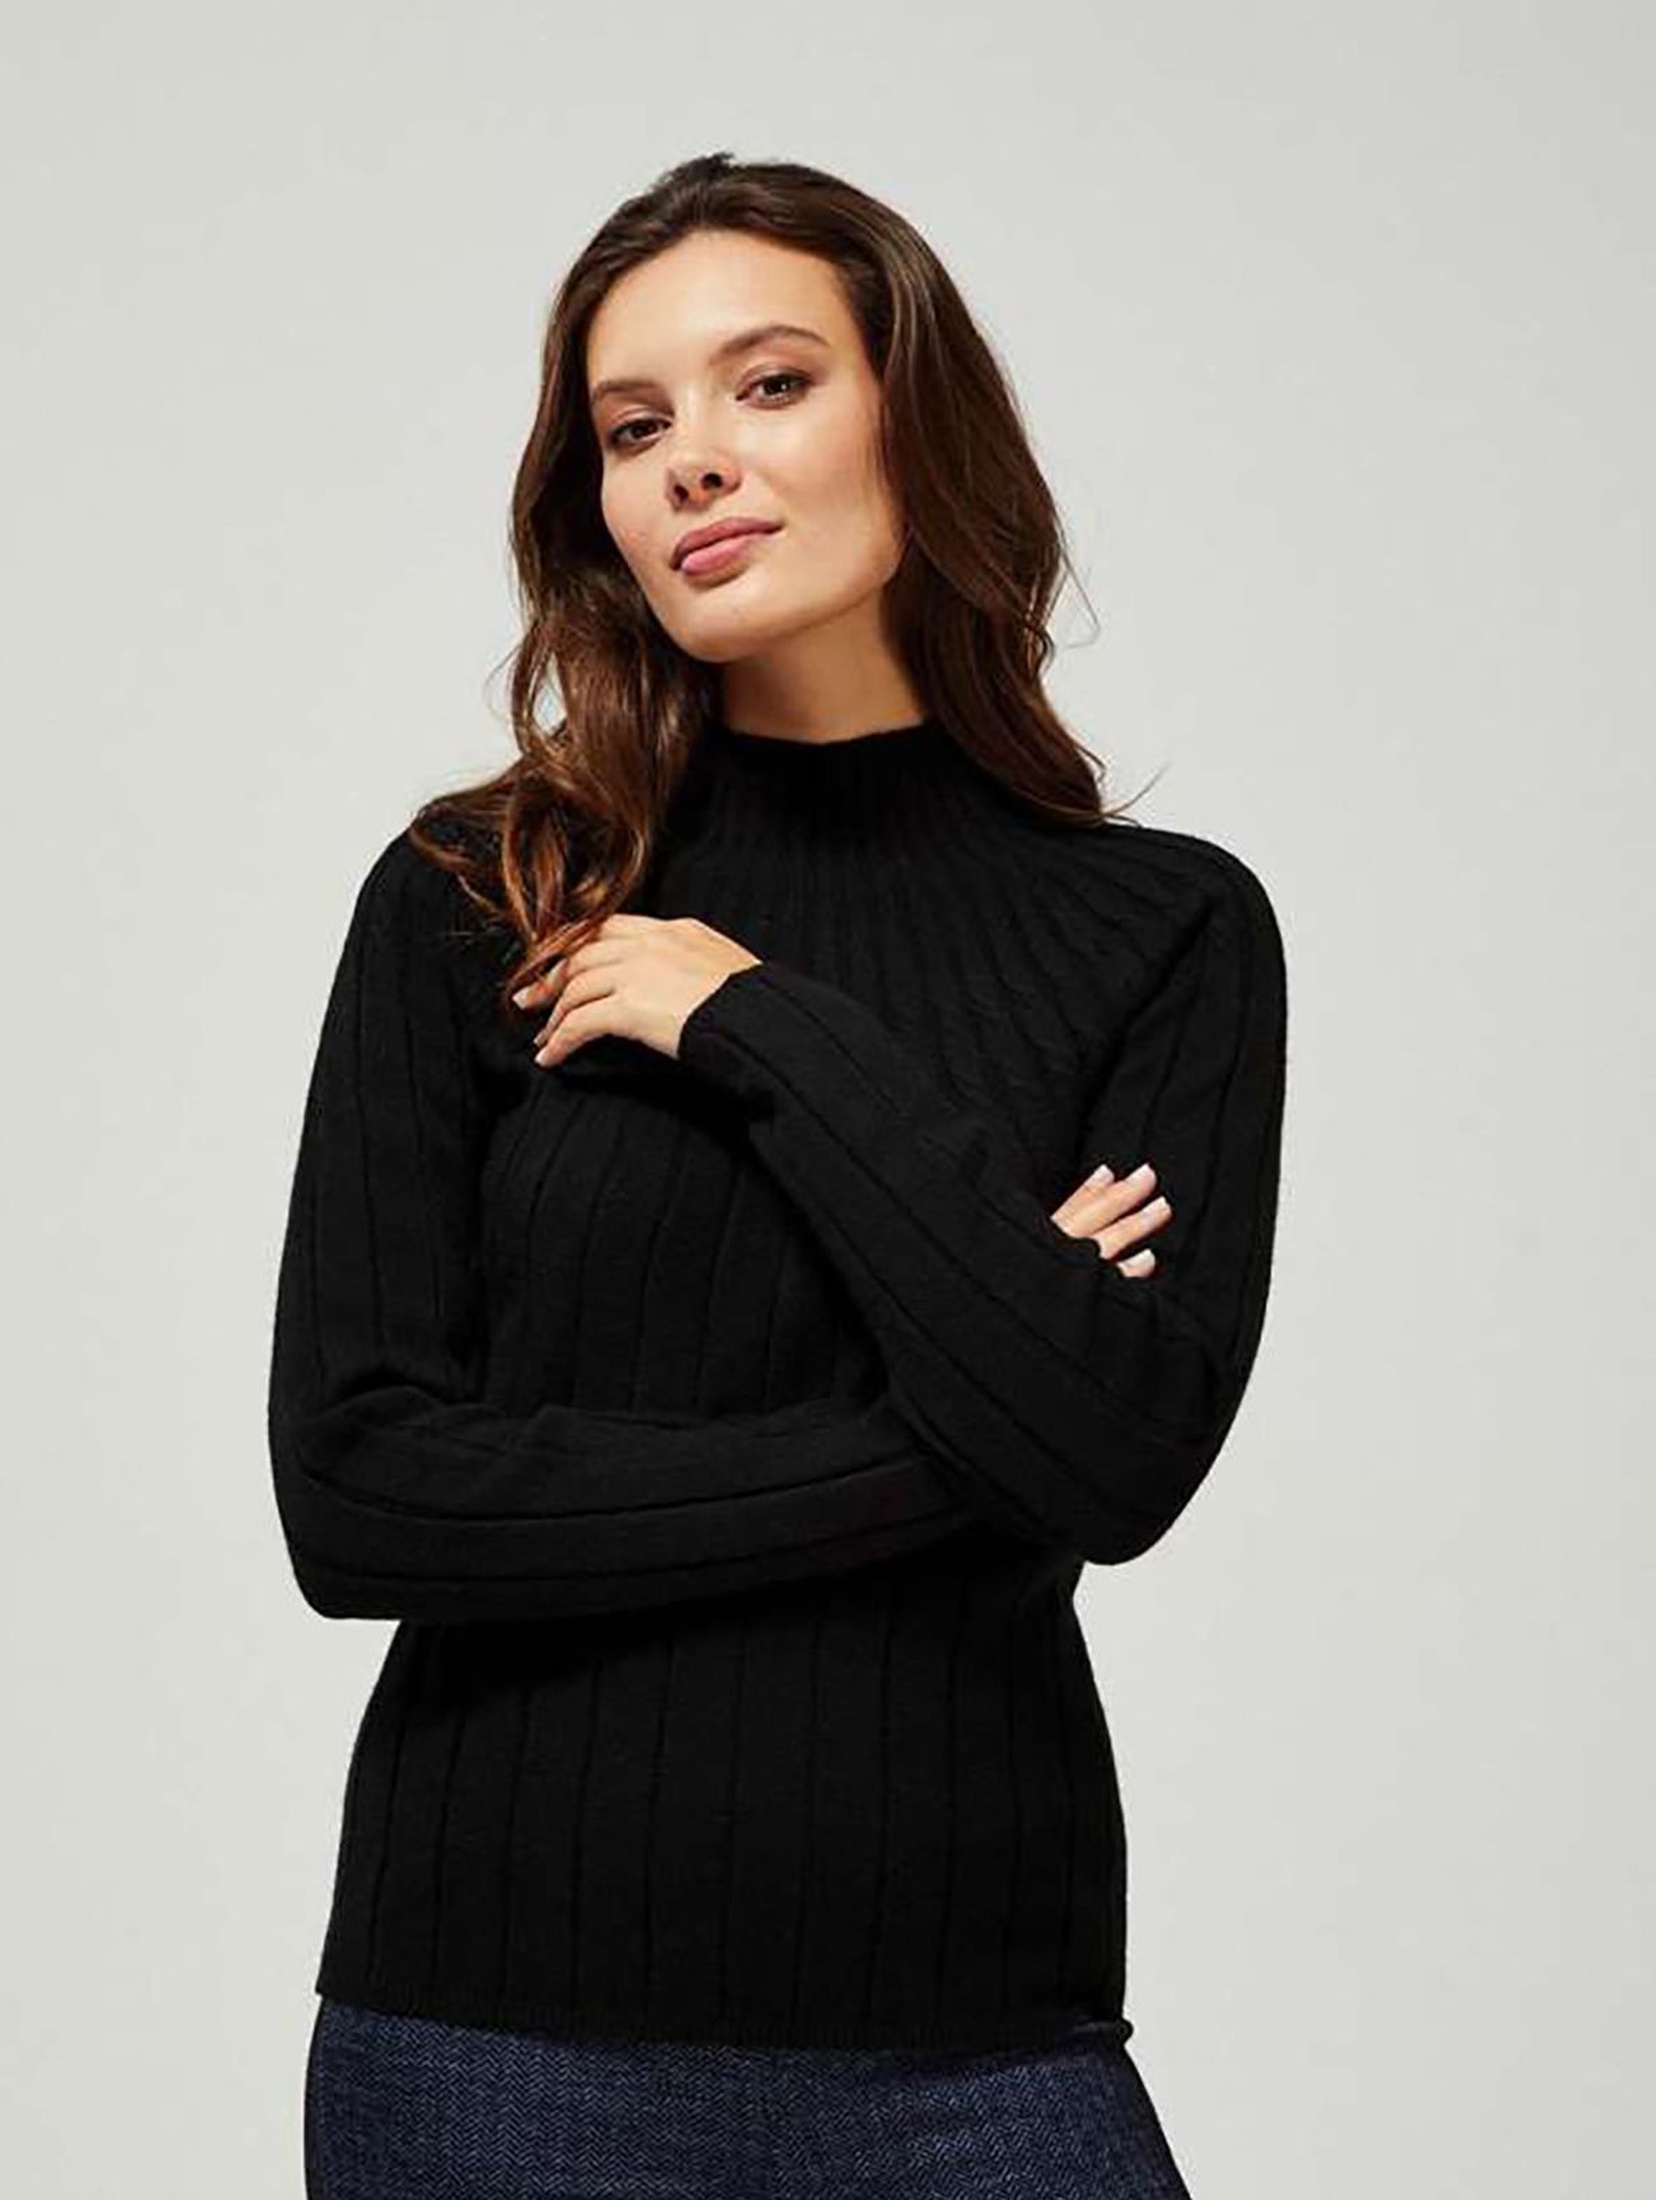 Luźny sweter damski - czarny półgolf